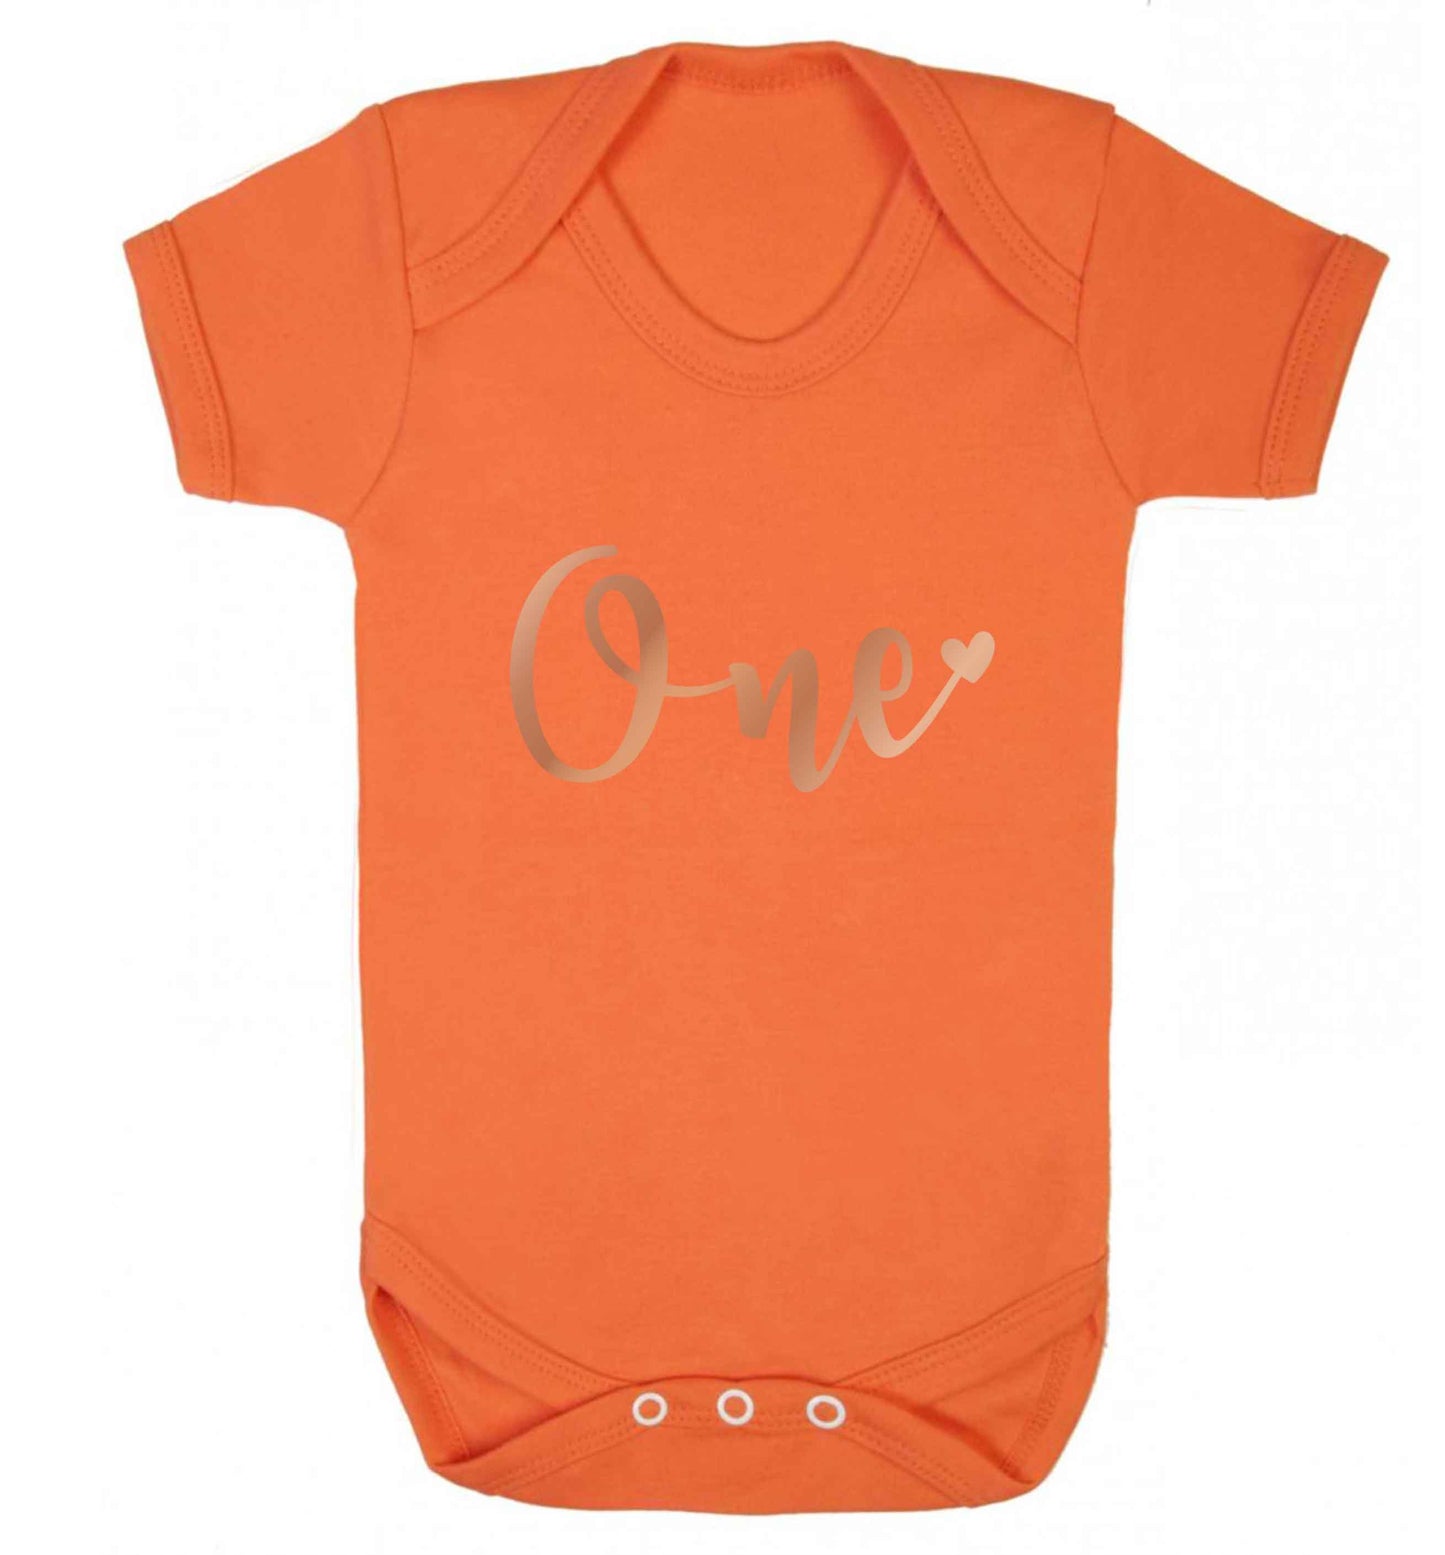 Rose Gold One baby vest orange 18-24 months